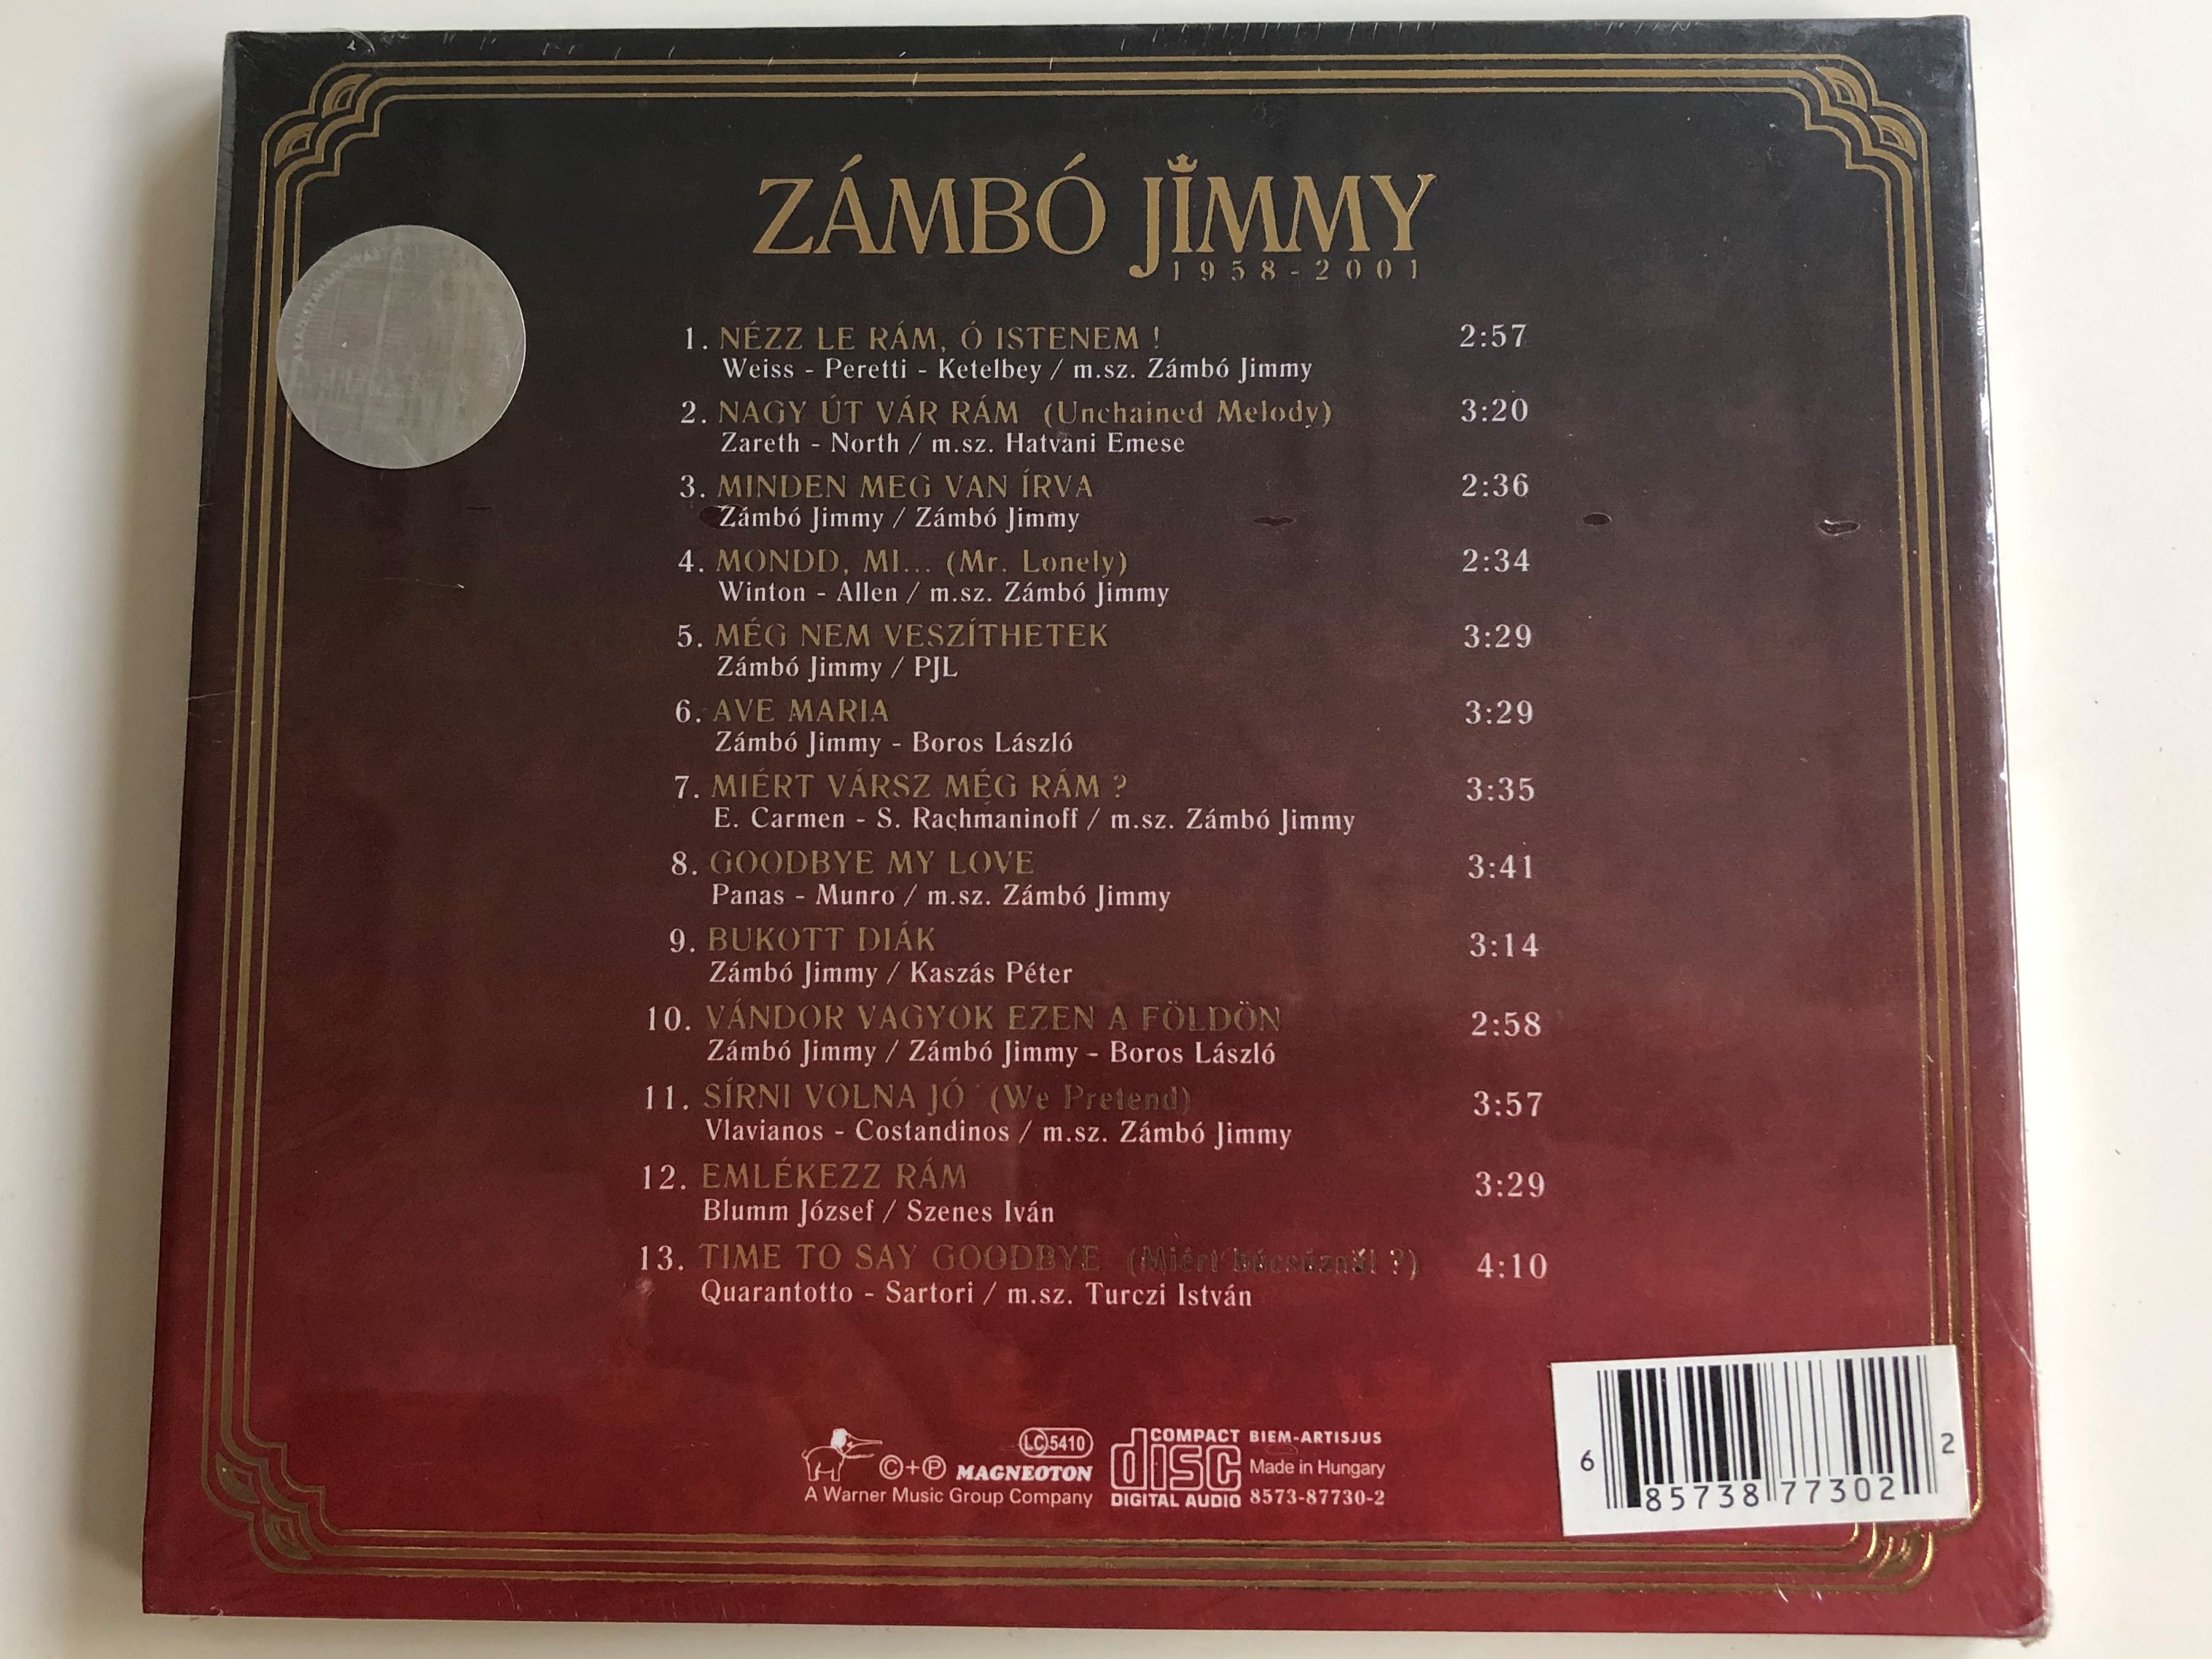 z-mb-jimmy-1958-2001-magneoton-audio-cd-8573-87730-2-2-.jpg